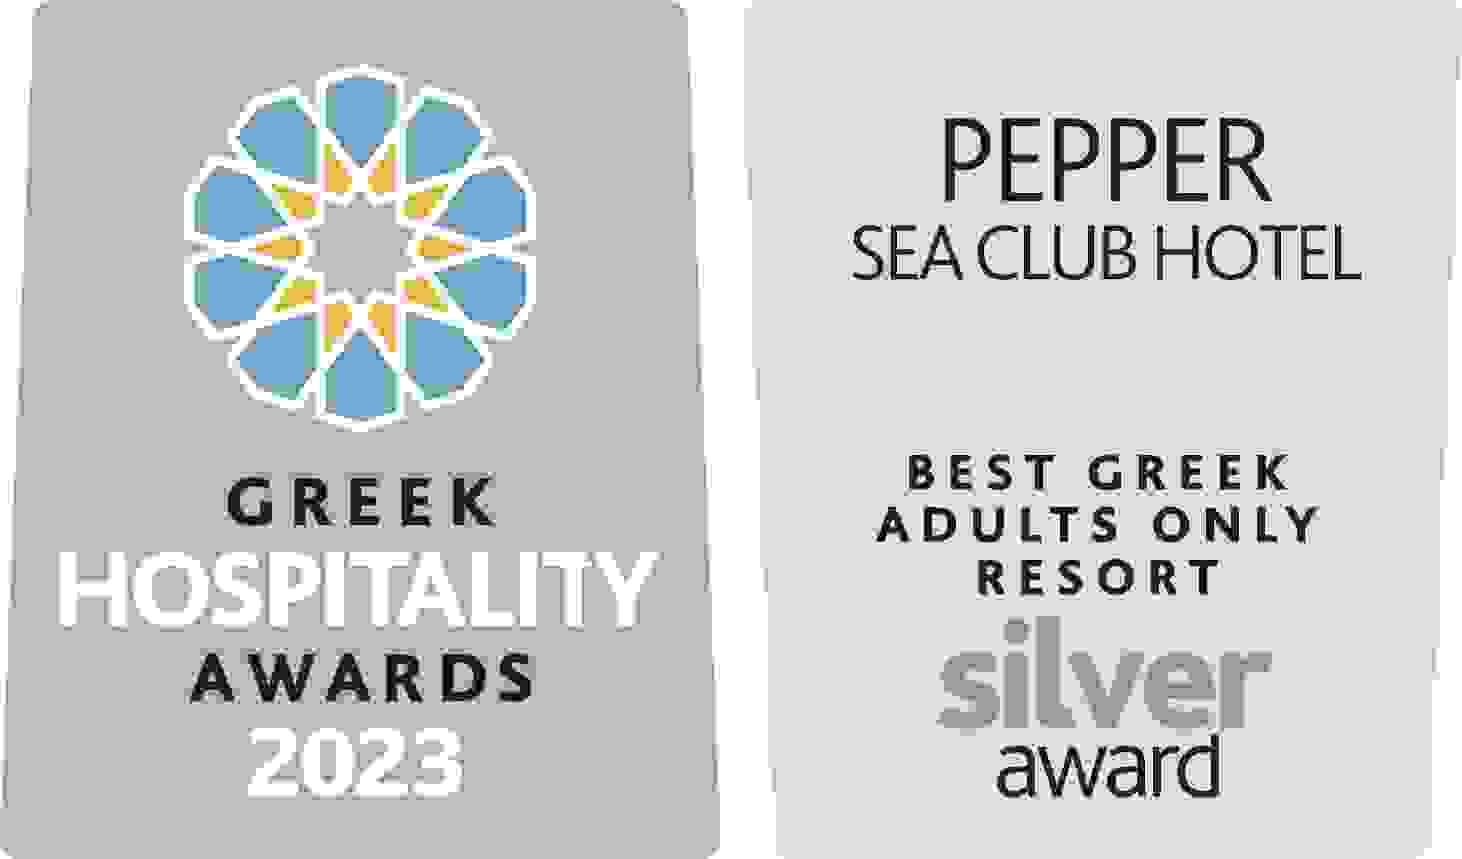 Greek Hospitality Awards 2023 - Best Greek Adults Only Resort